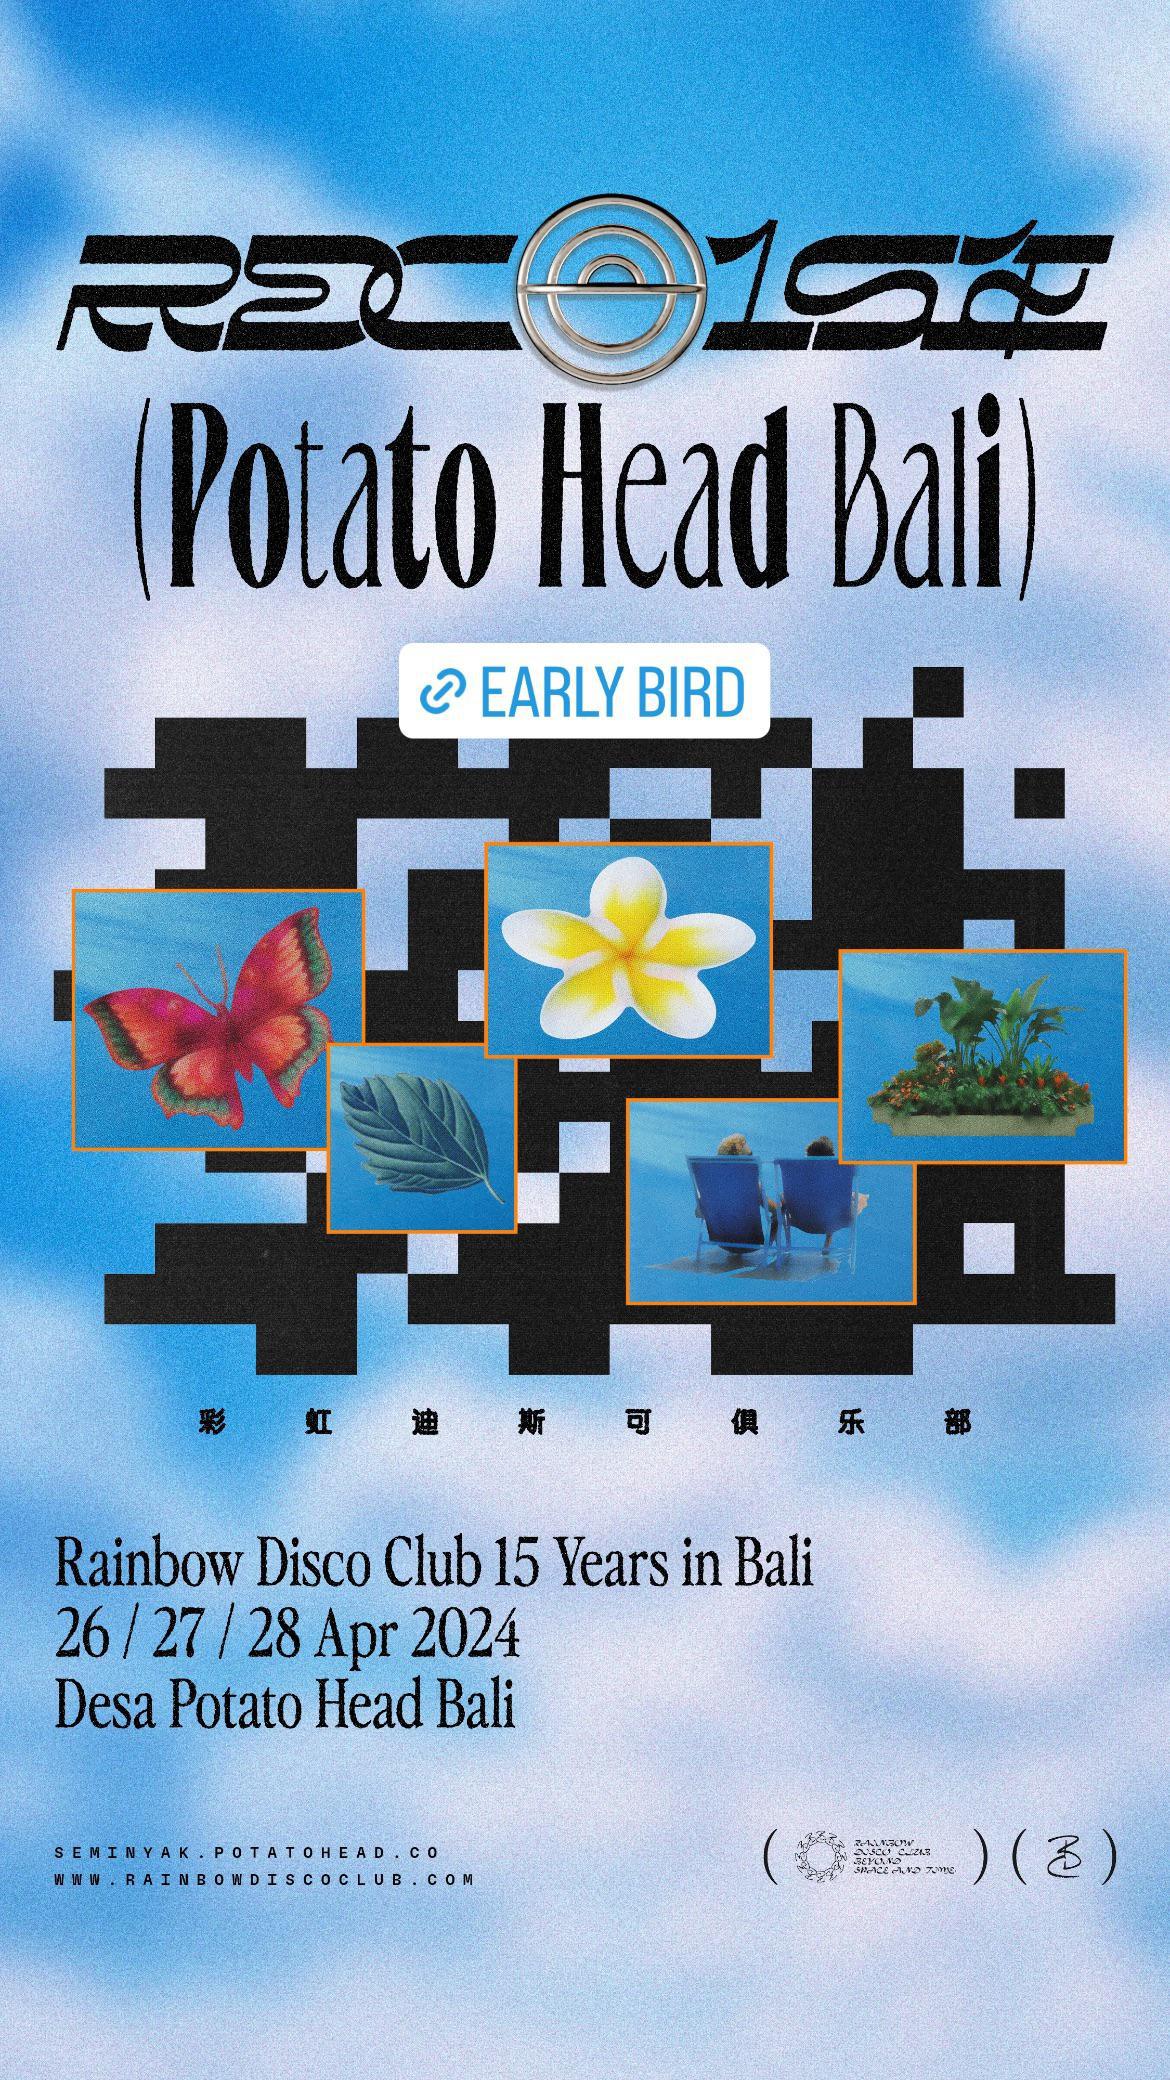 Party Rainbow Disco Club 15 years in Bali at Desa Potato Head Bali 5829